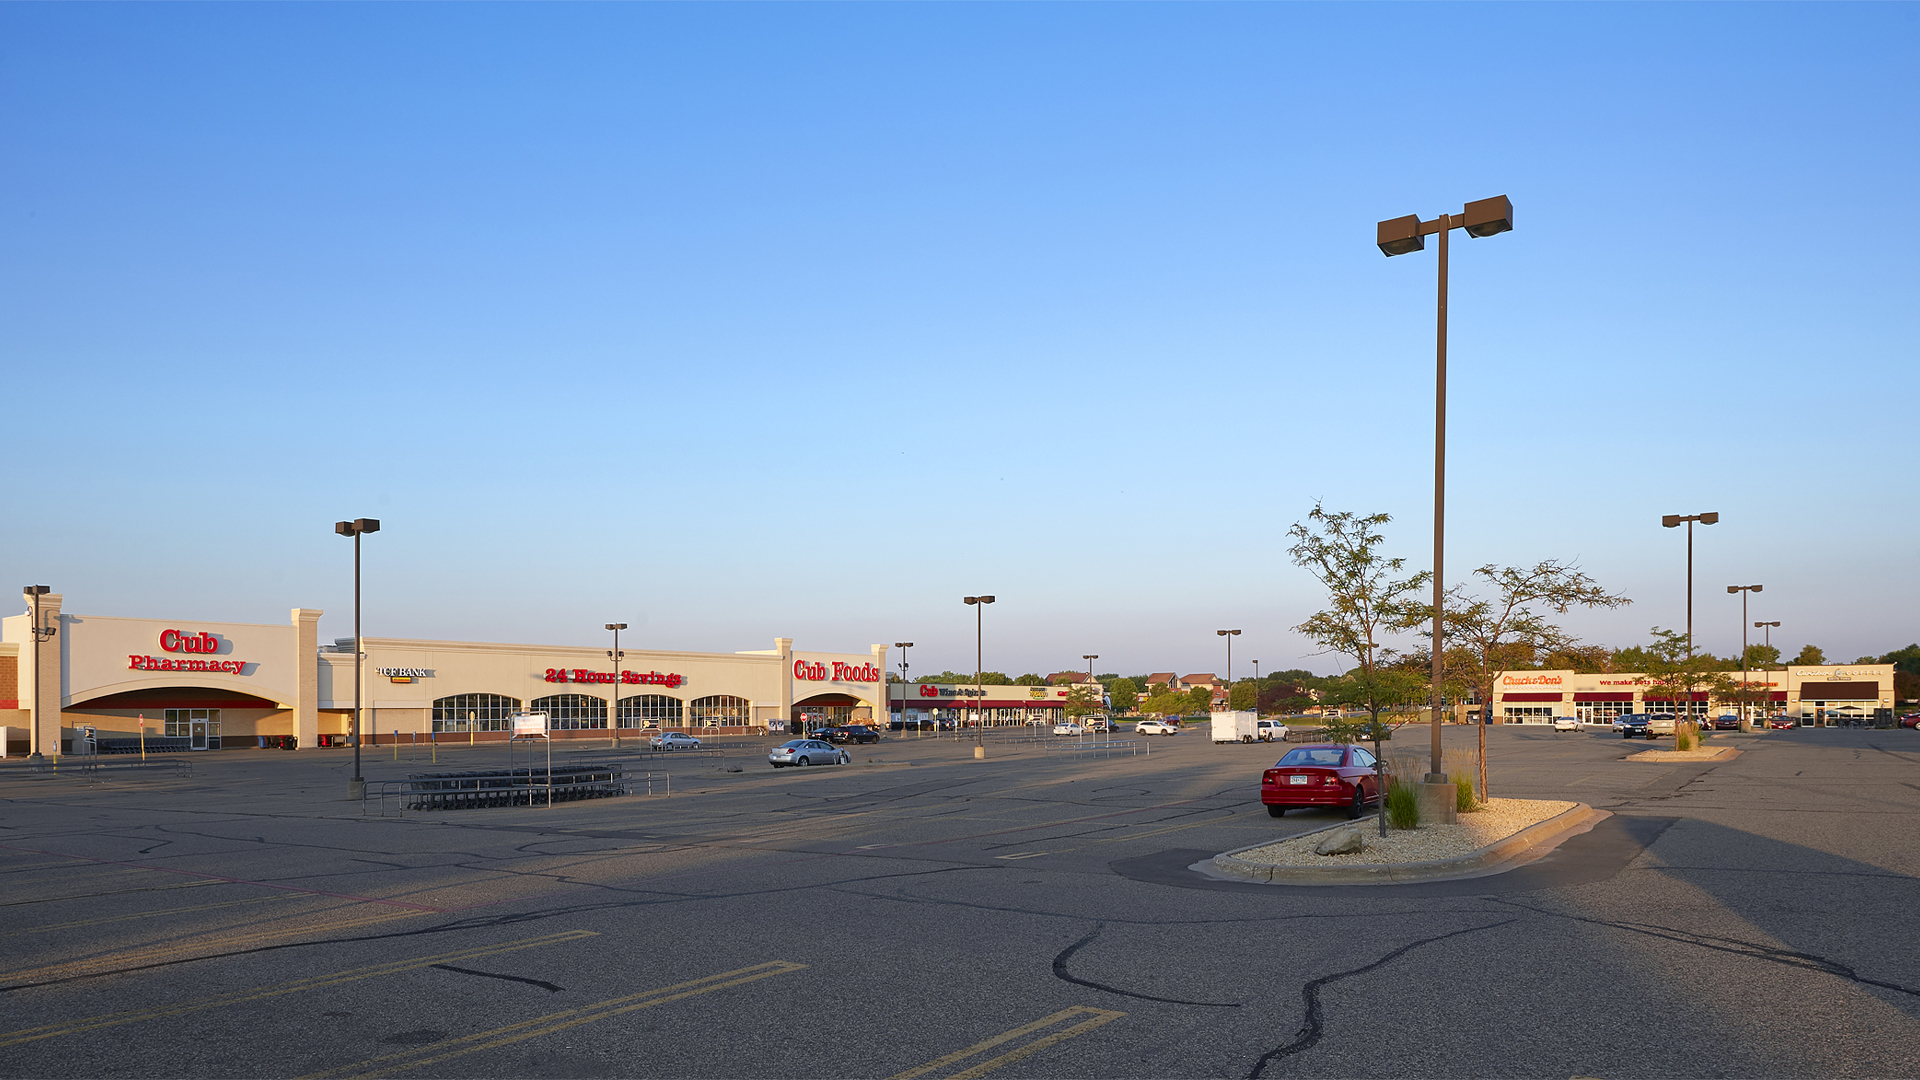 Rosemount Village Shopping Center Rosemount MN View of entire center from parking lot